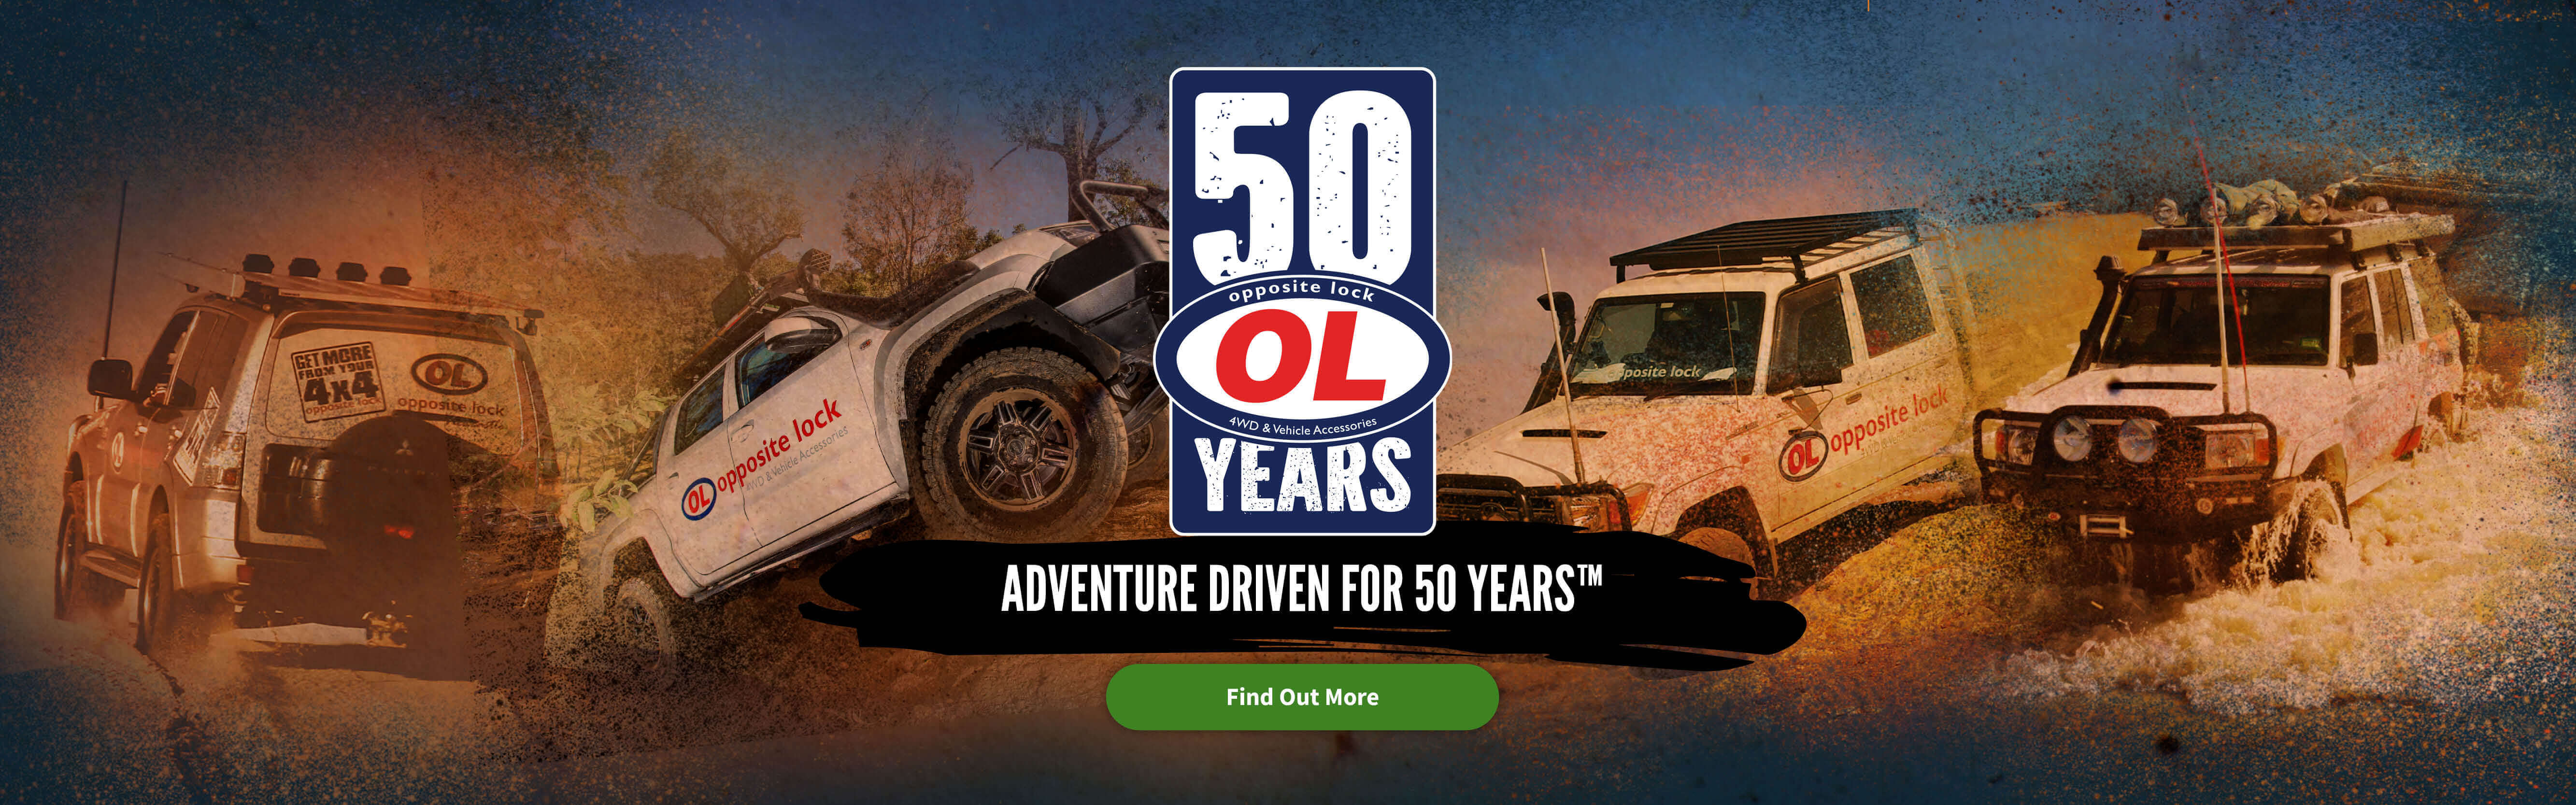 OL 50th Anniversary Web Banner